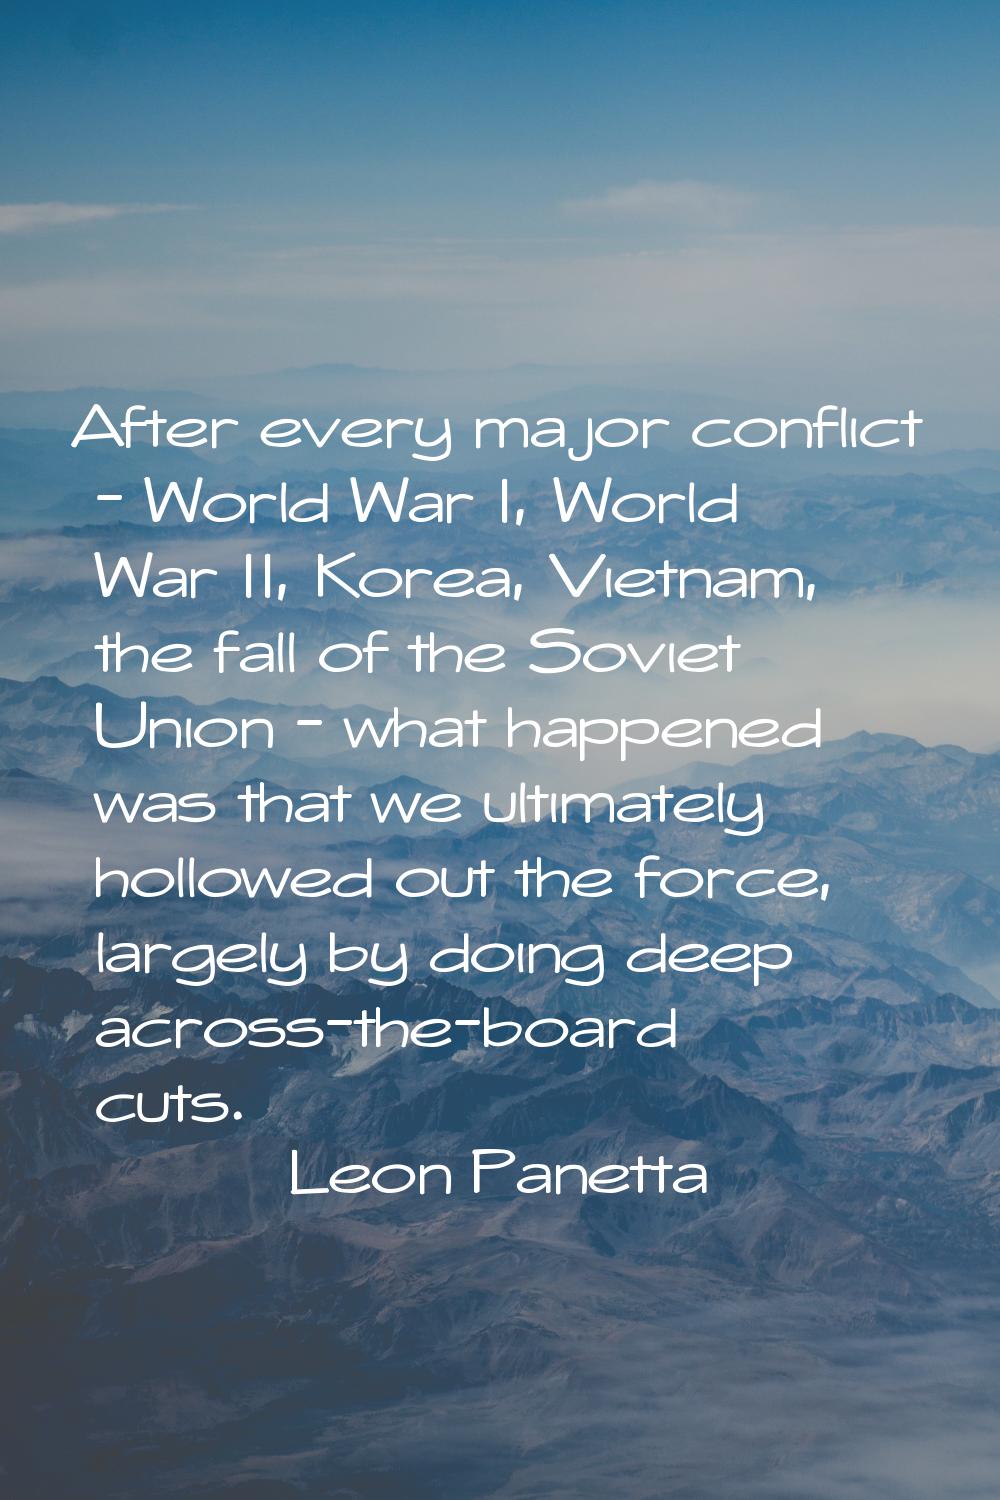 After every major conflict - World War I, World War II, Korea, Vietnam, the fall of the Soviet Unio